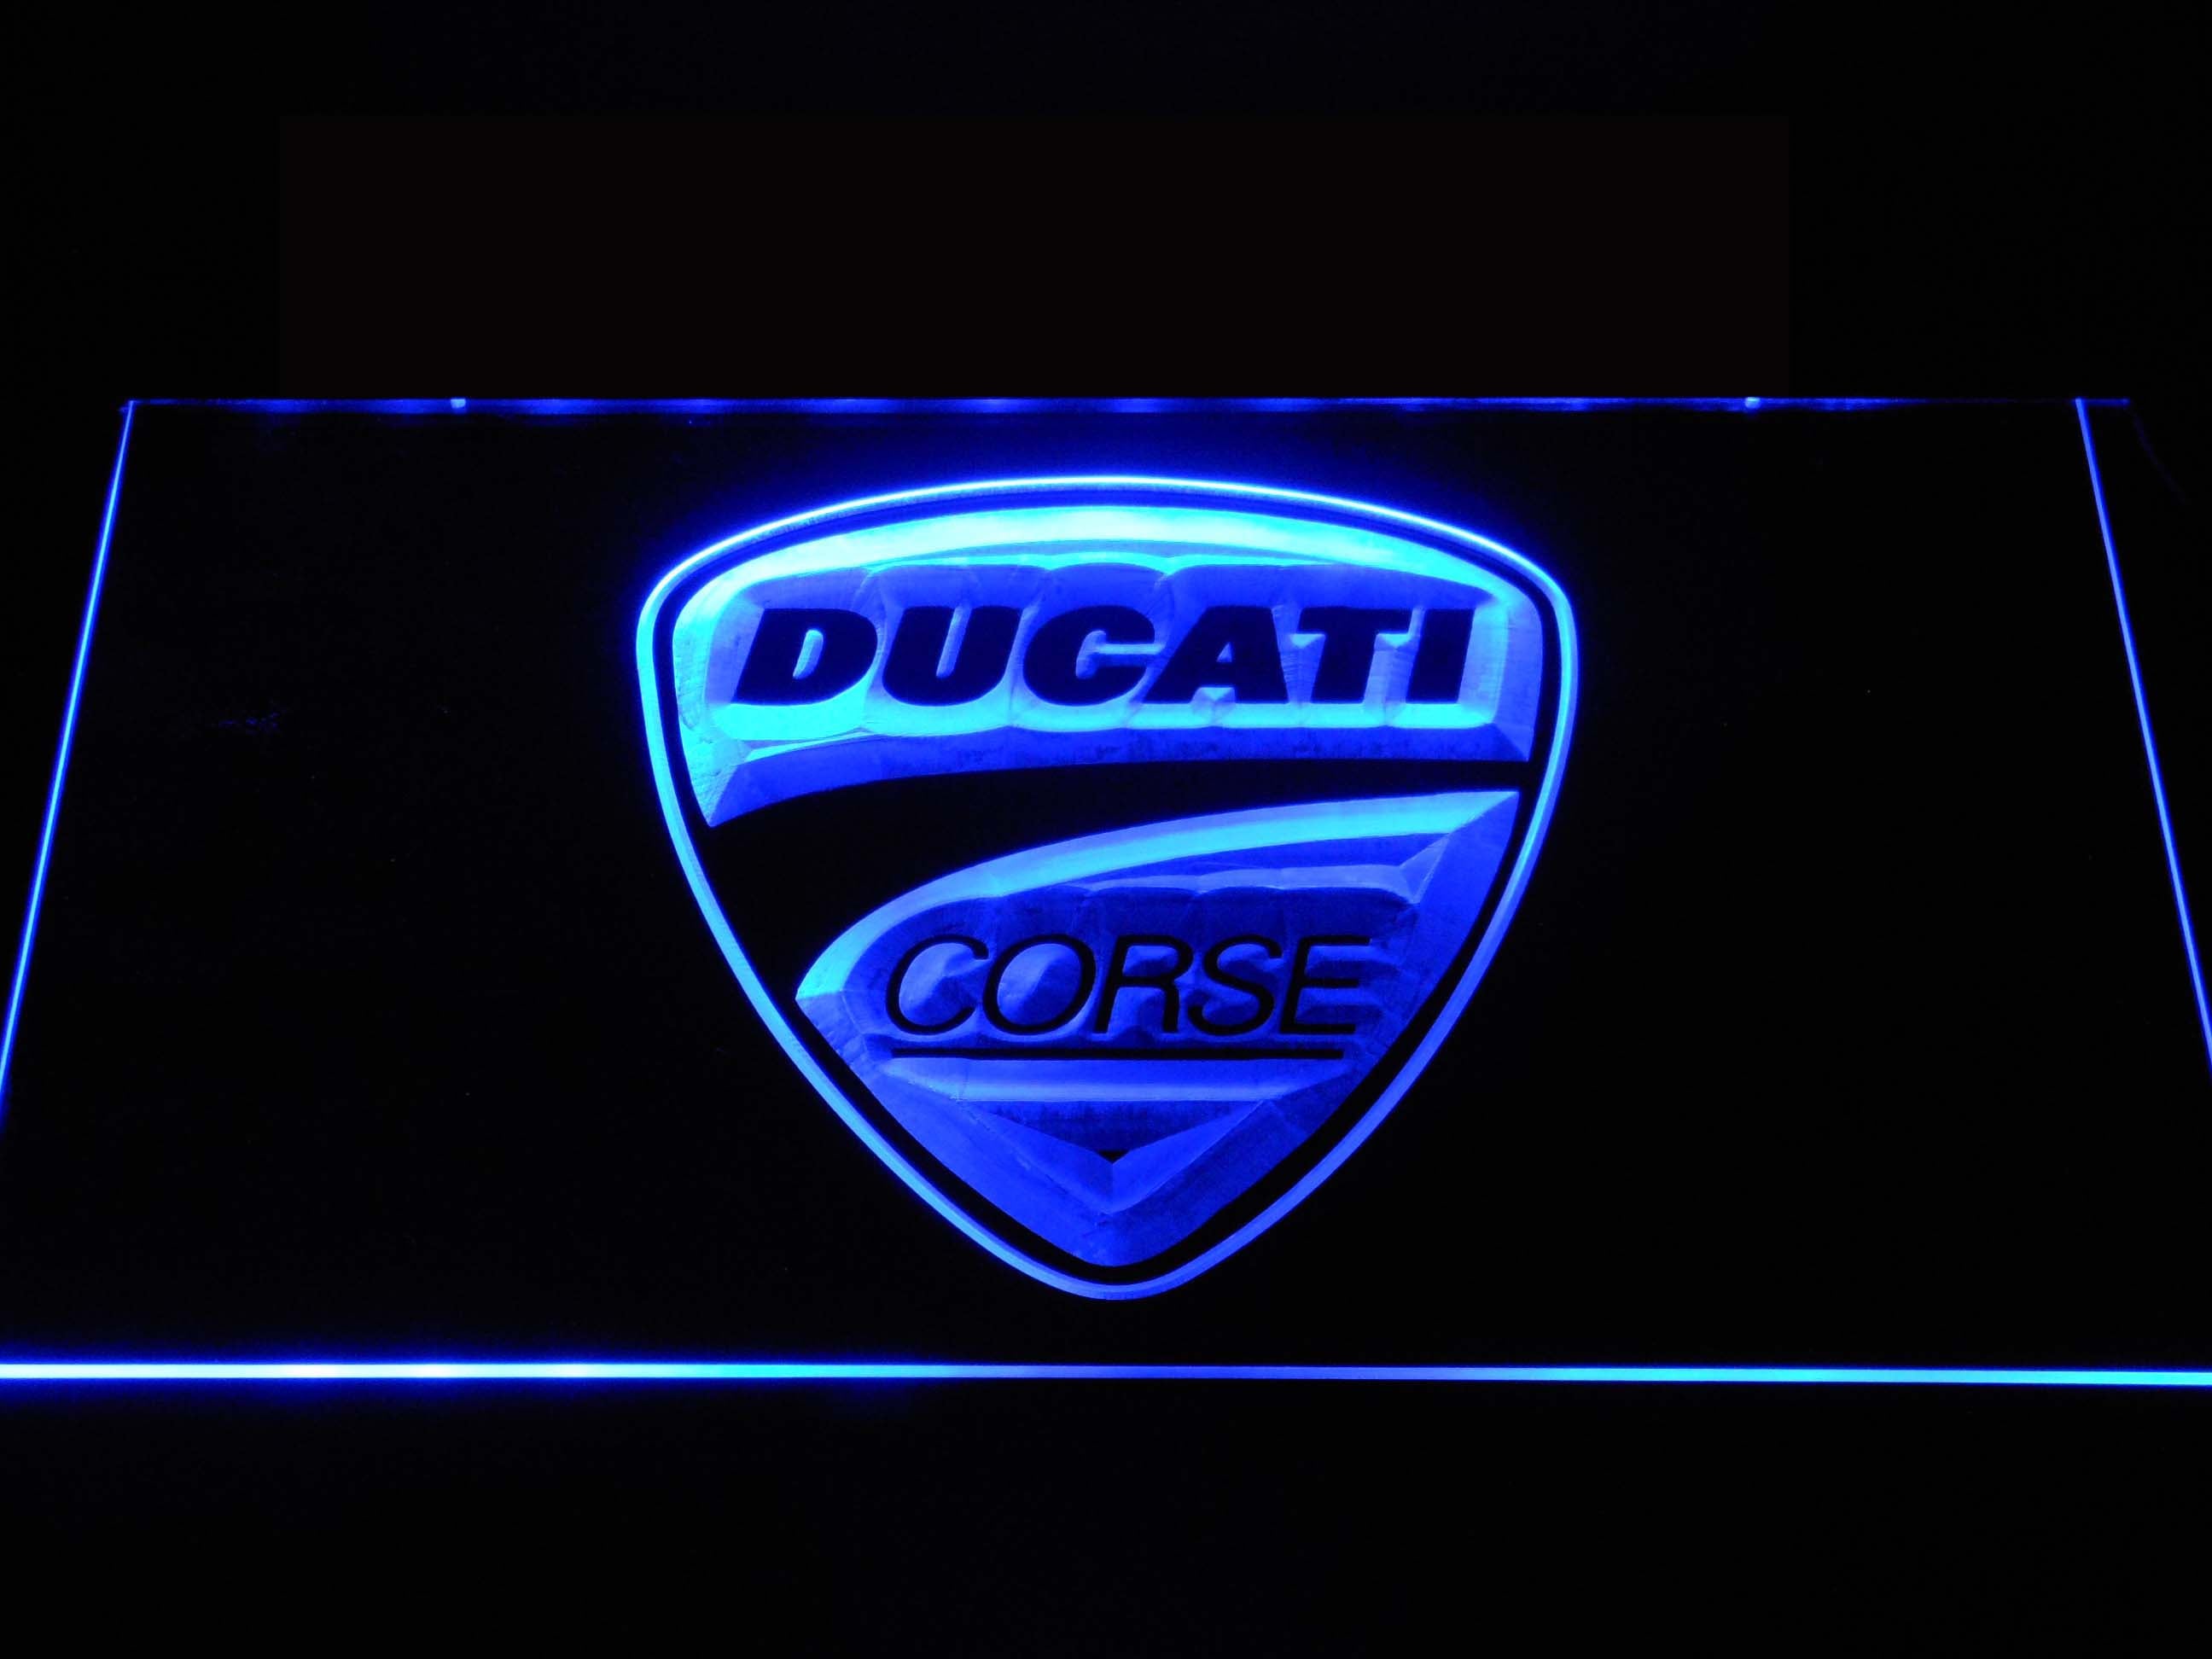 Ducati Corse Neon Light LED Sign